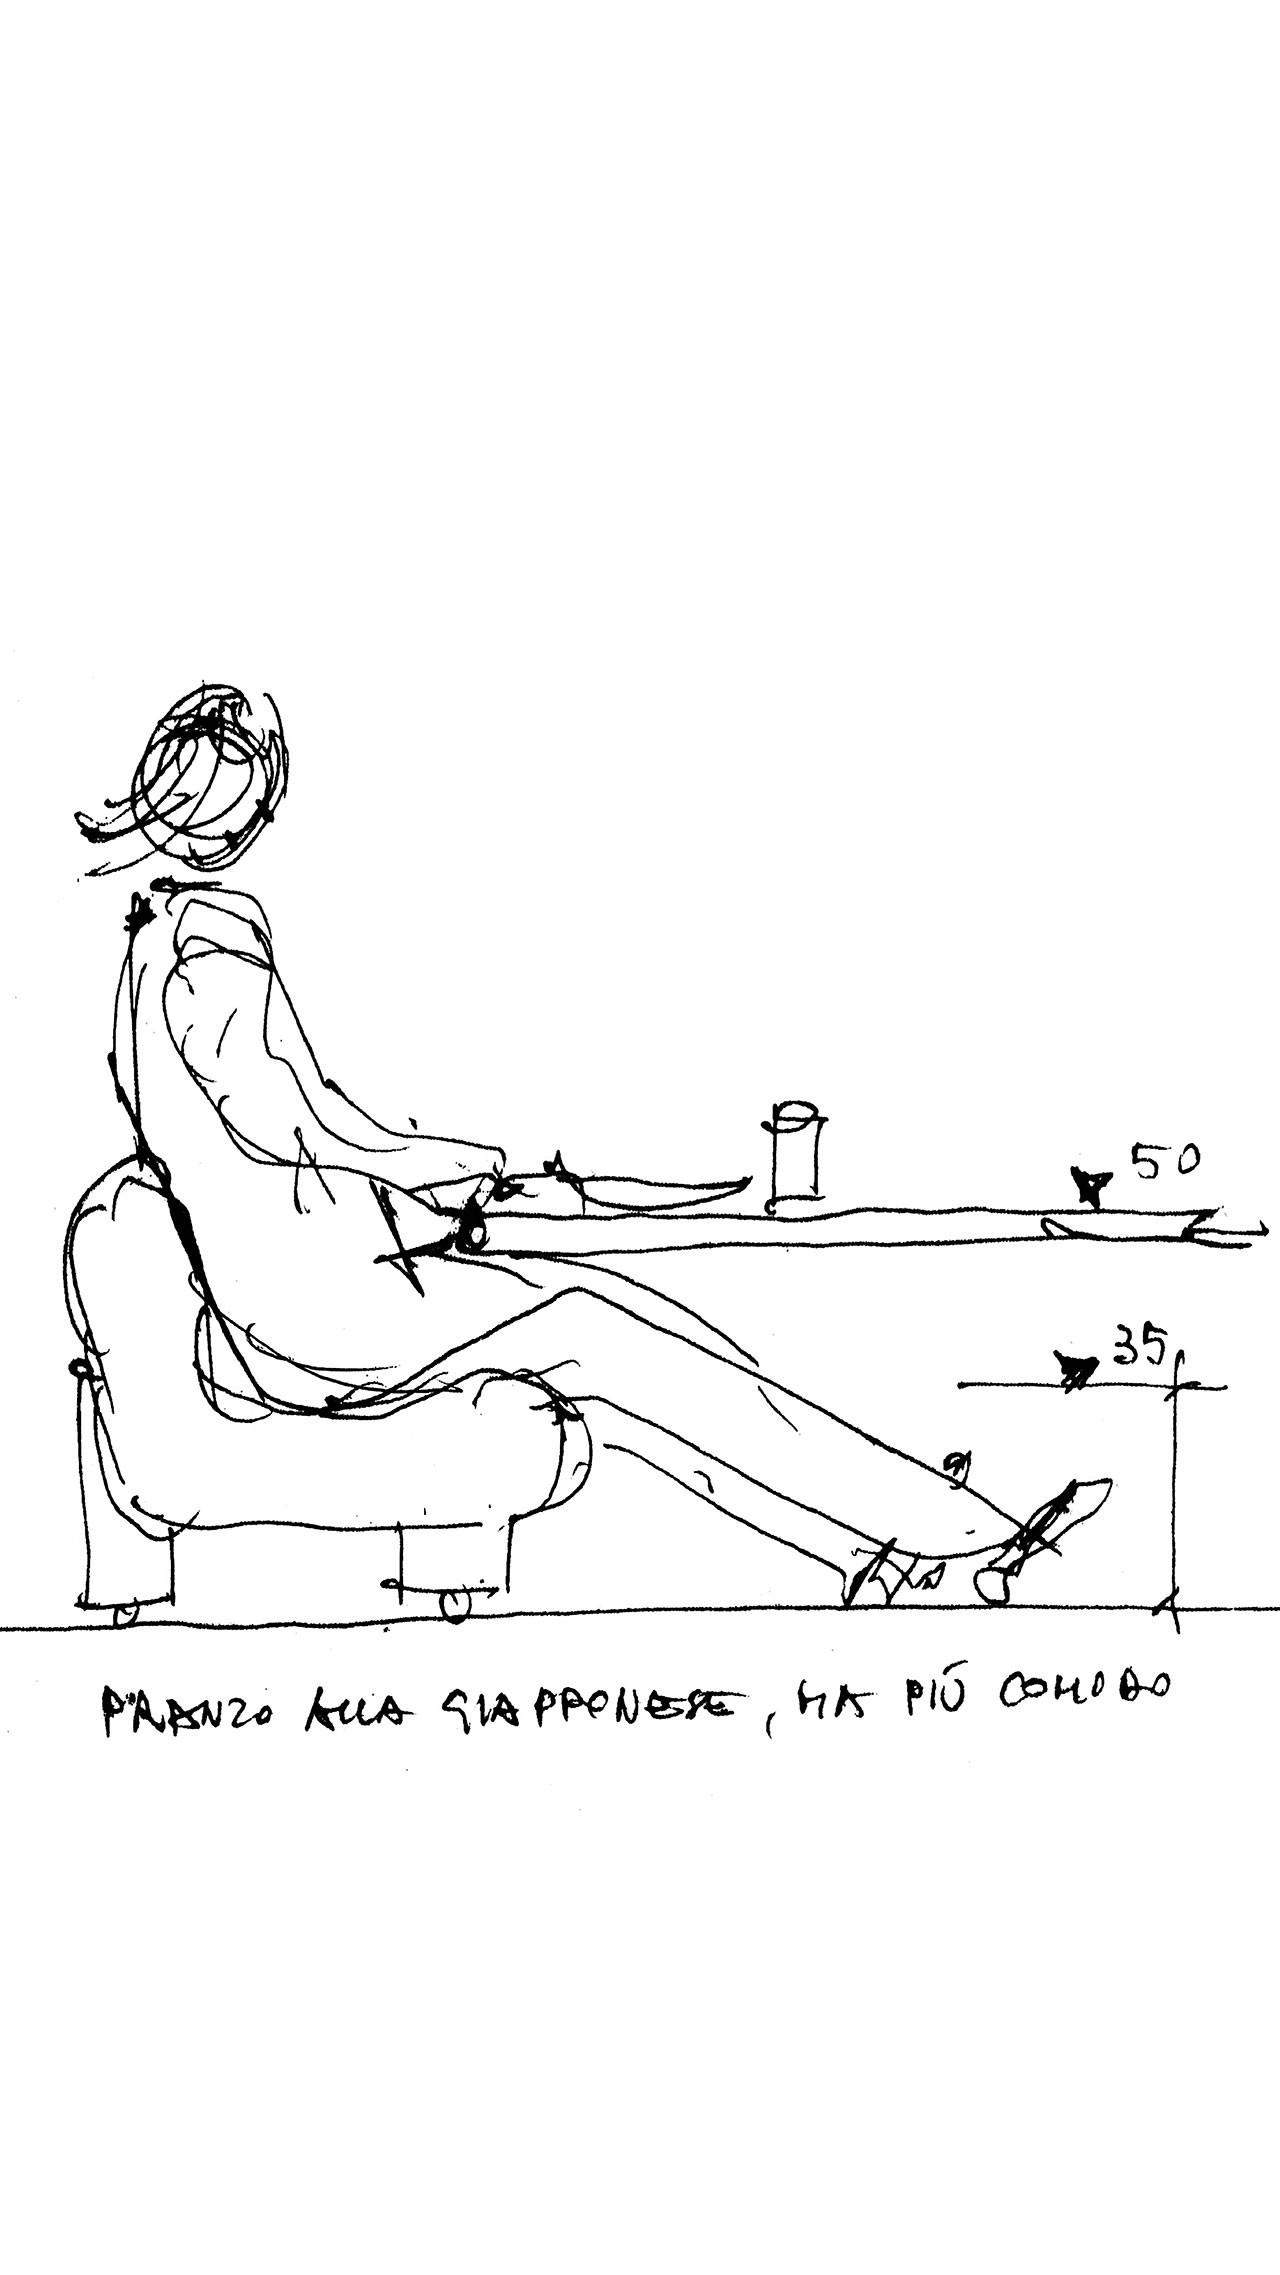 Botolo Armchair - Low version (Sketch). Designed by Cini Boeri for artflex in 1973. © Loro Piana.